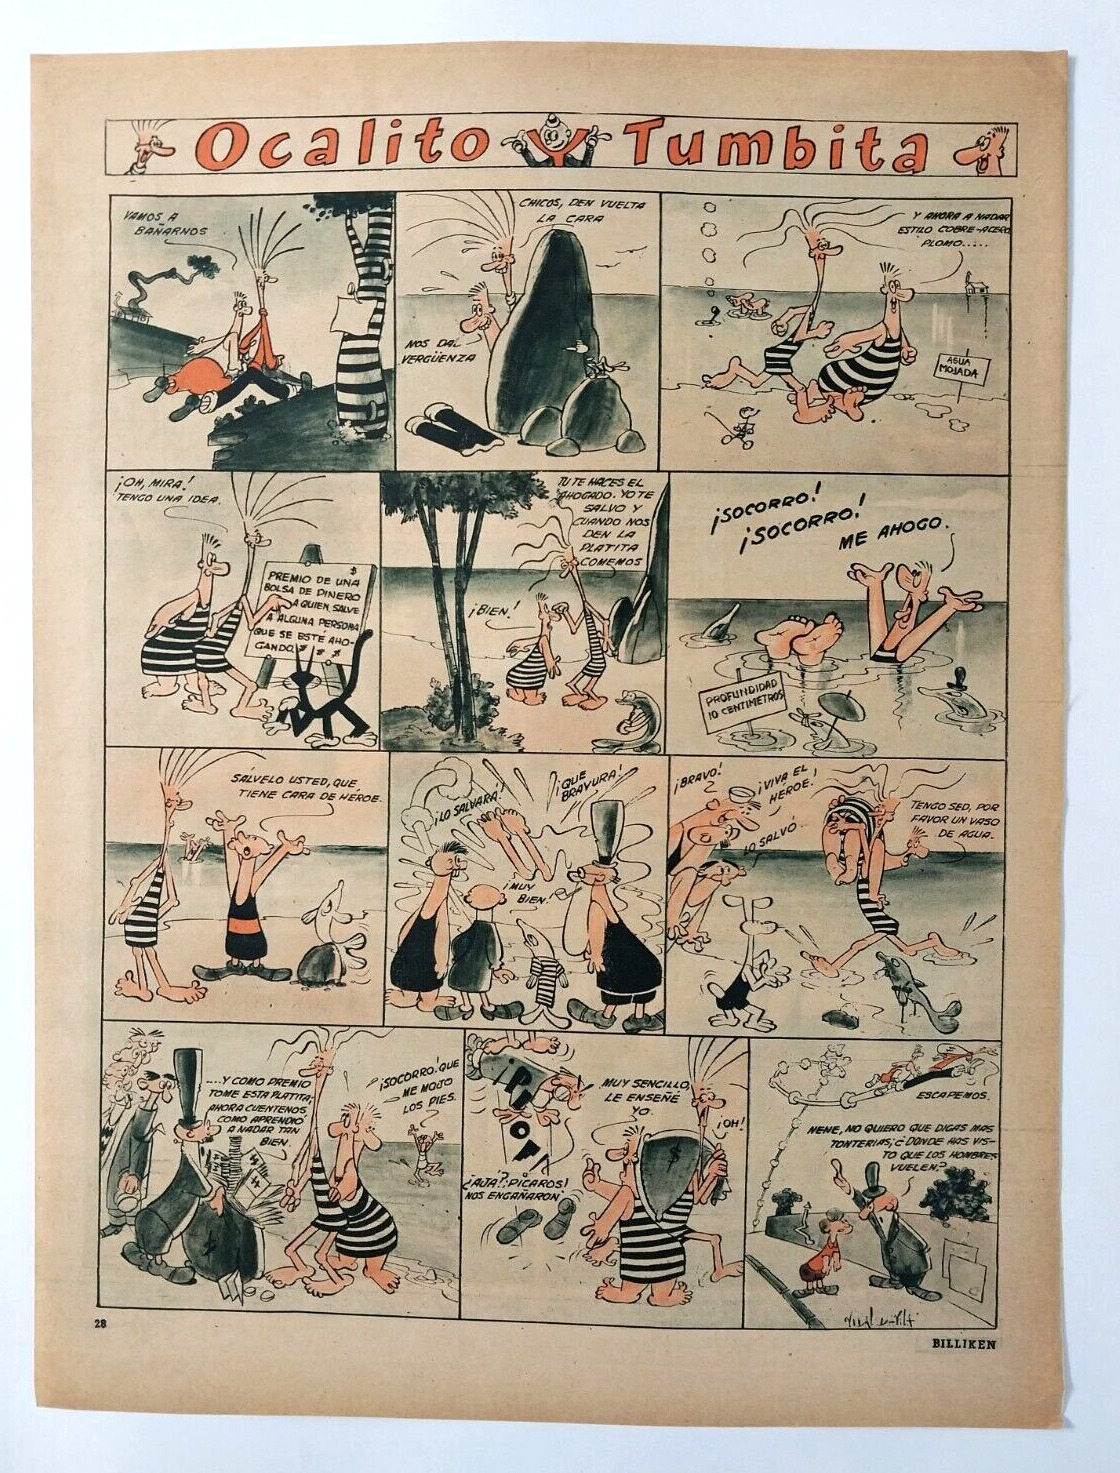 Vintage 1945 Argentina Comic Strip Ocalito y Tumbita Single Page in Spanish Rare